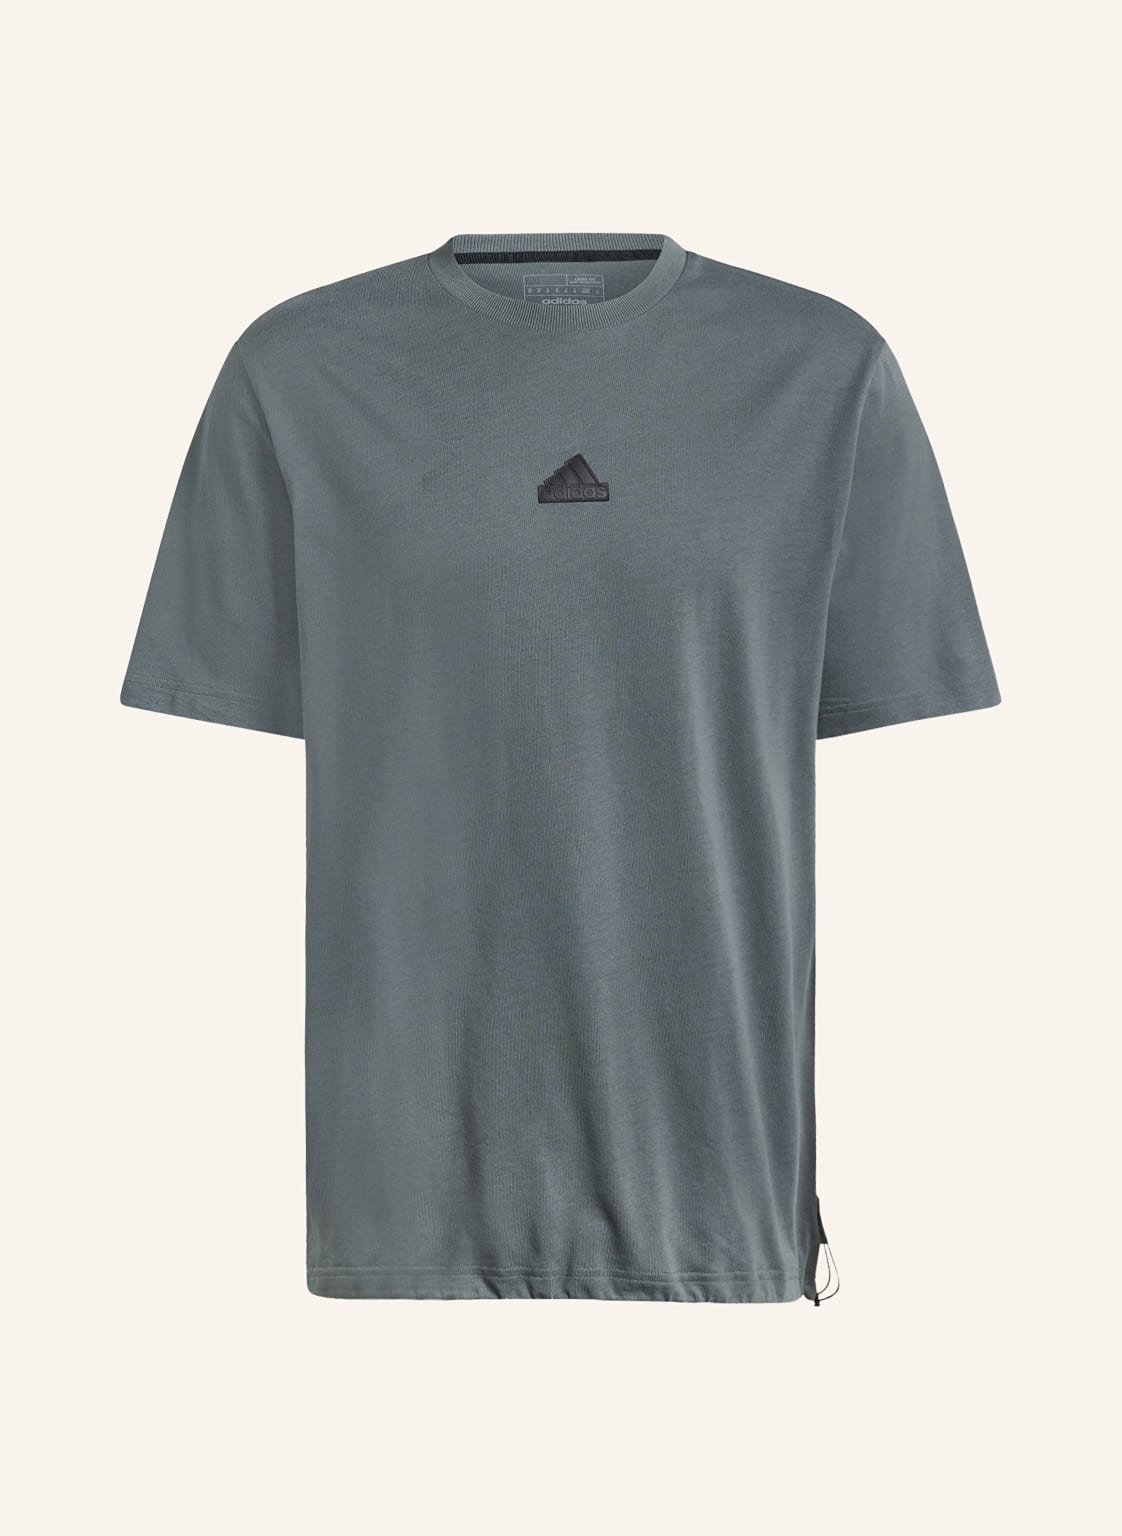 Adidas T-Shirt M Ce q1 grau von Adidas